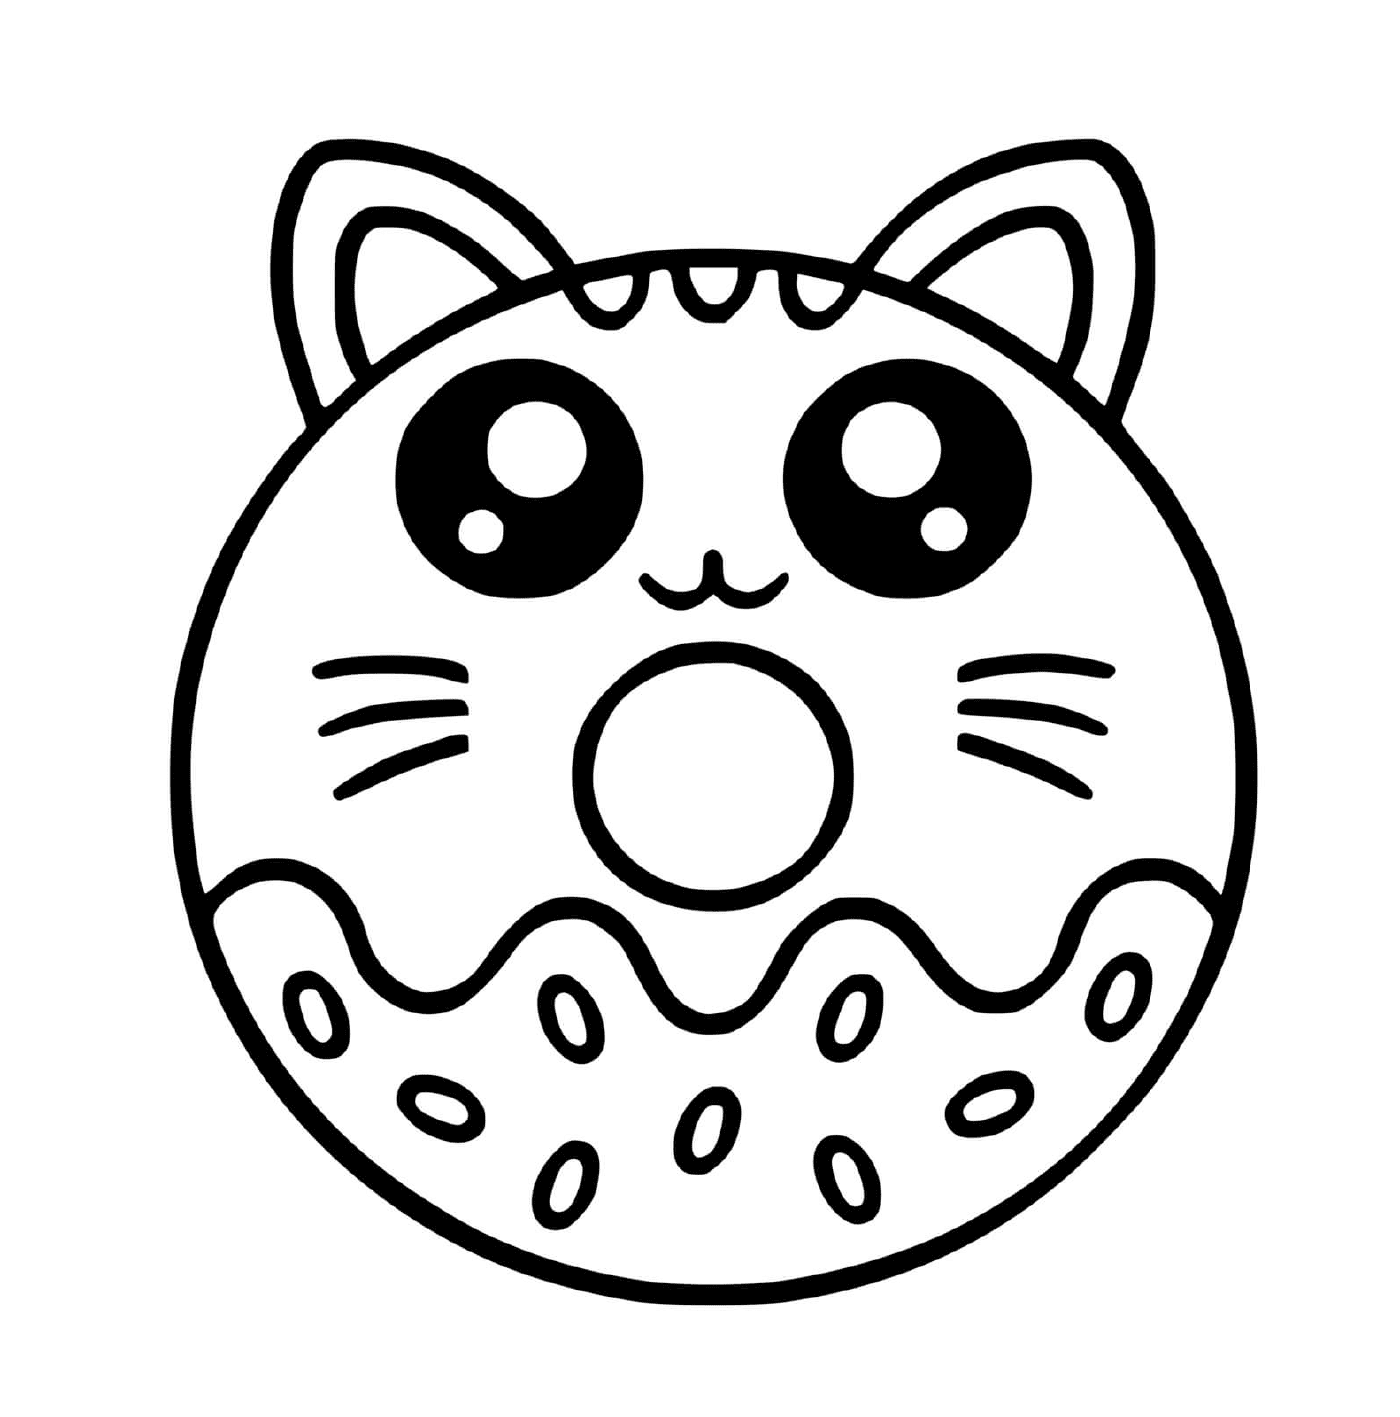  Donut-chat kawaii, simpatico gourmand 